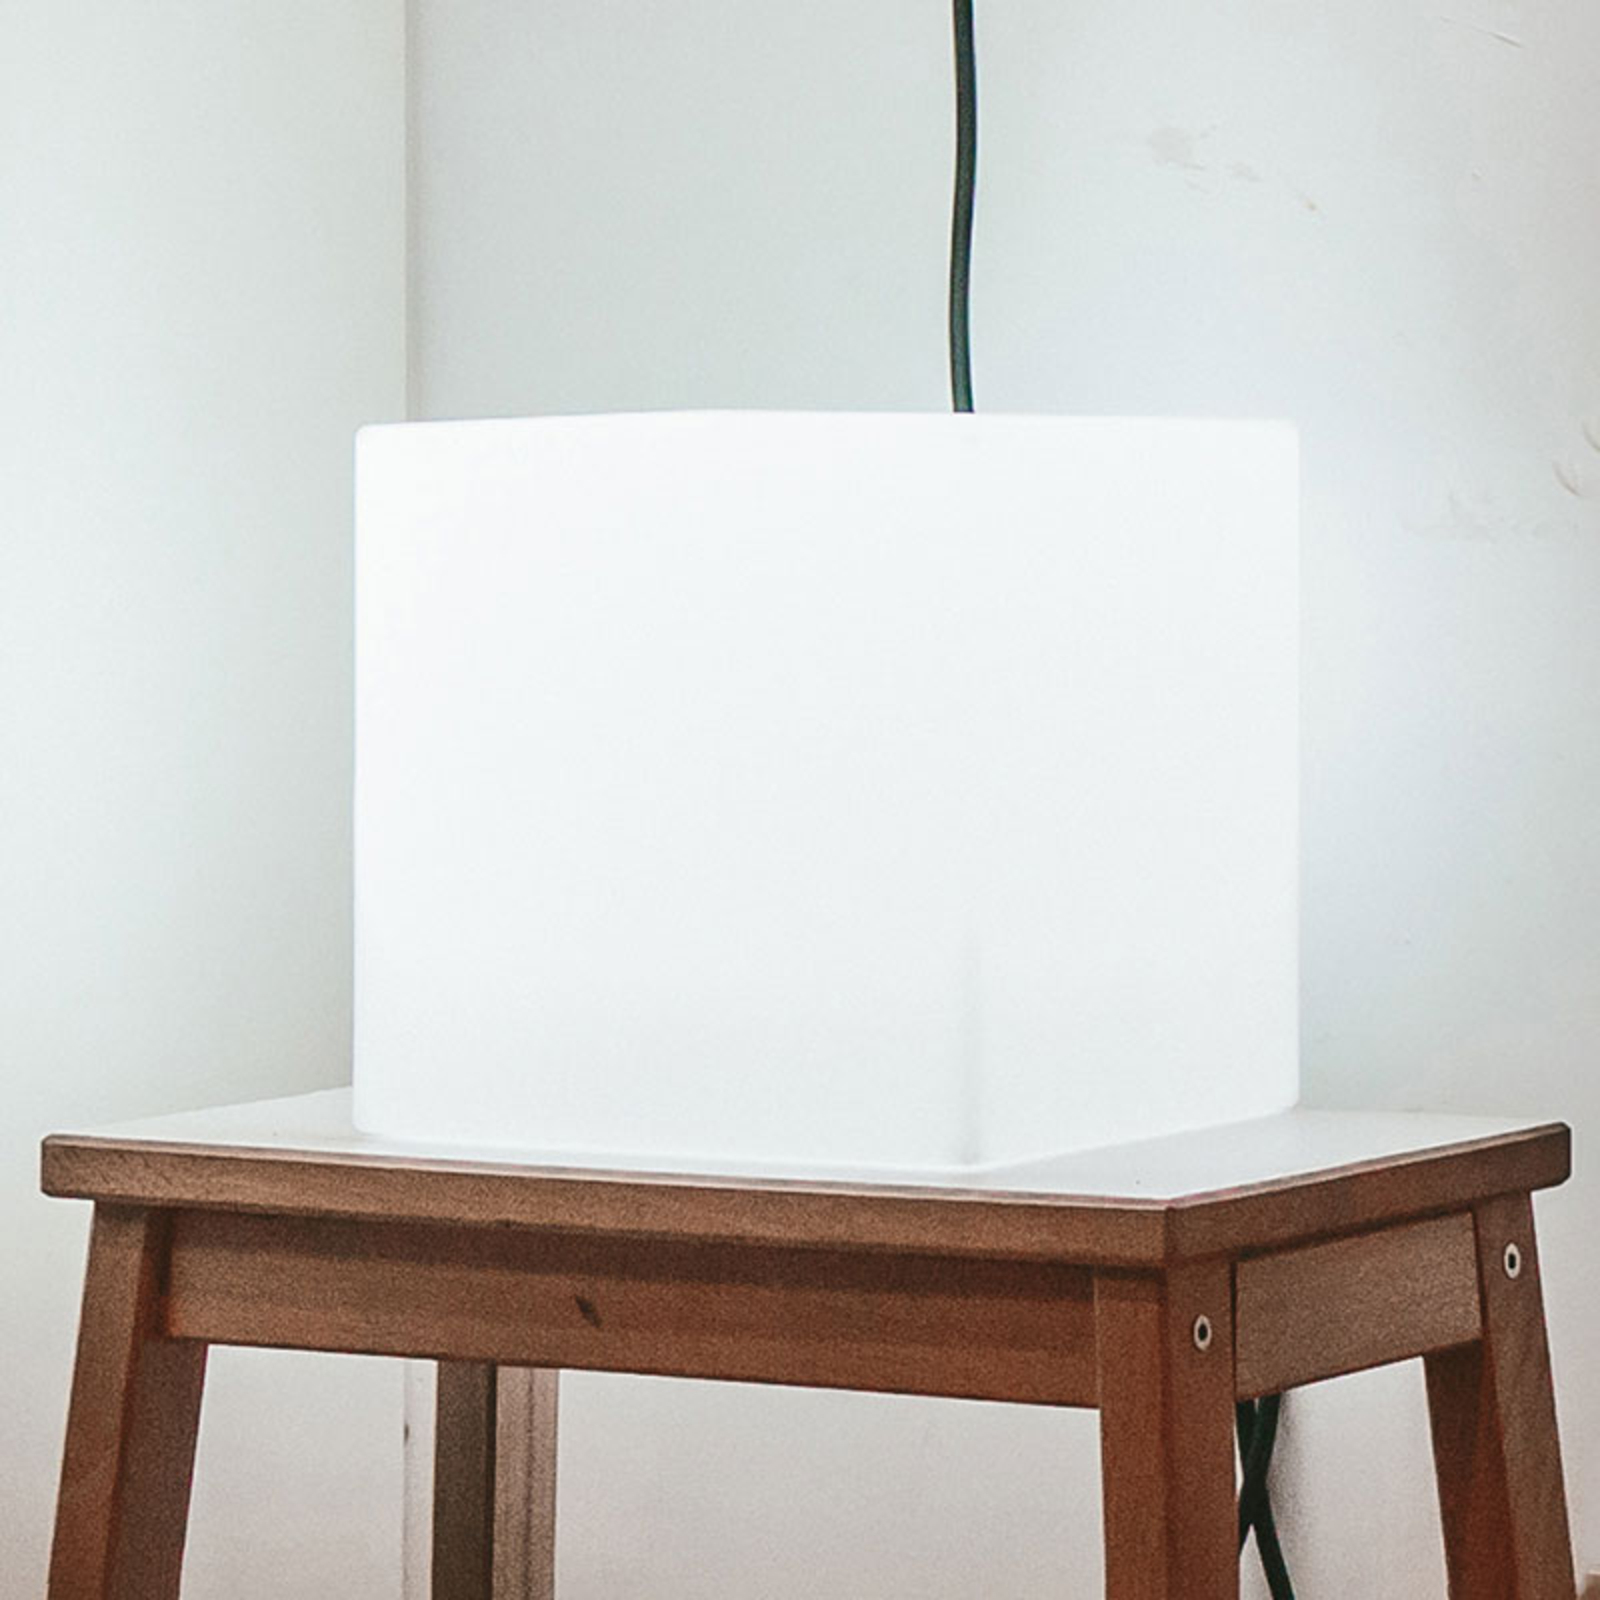 Newgarden Cuby dekoratívna svetelná kocka výška 20 cm